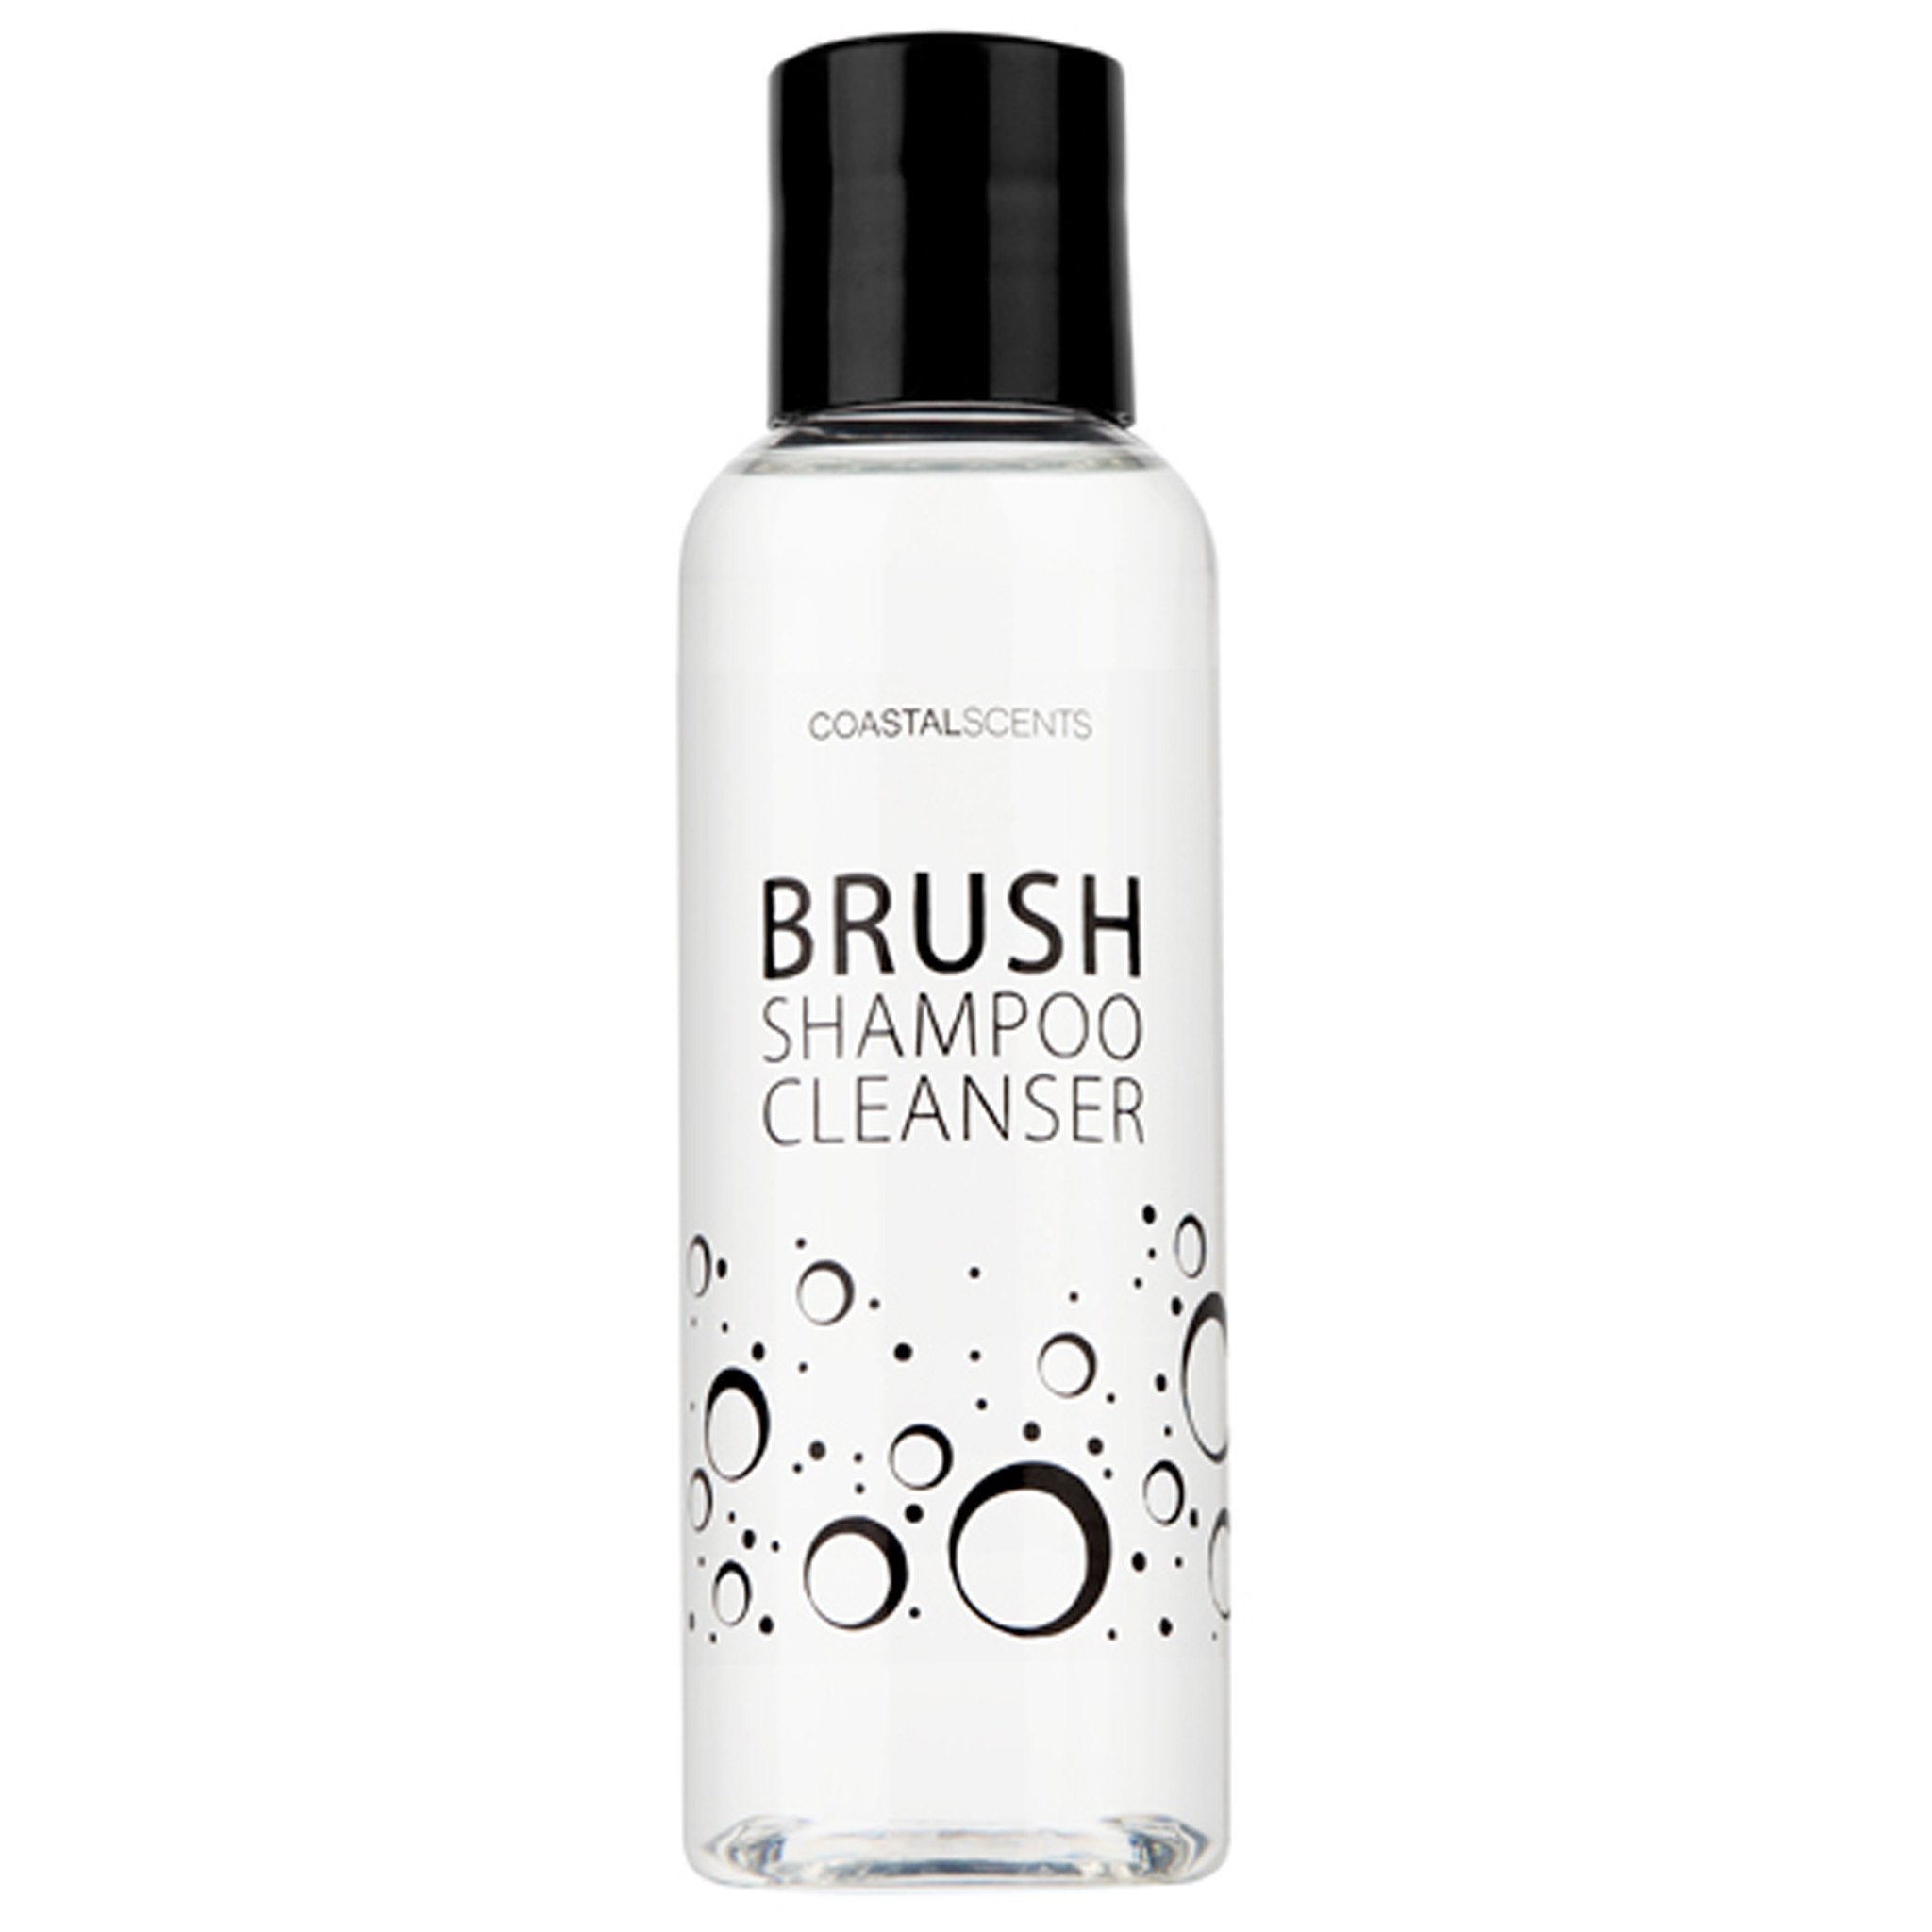 Brush Shampoo Cleanser Image